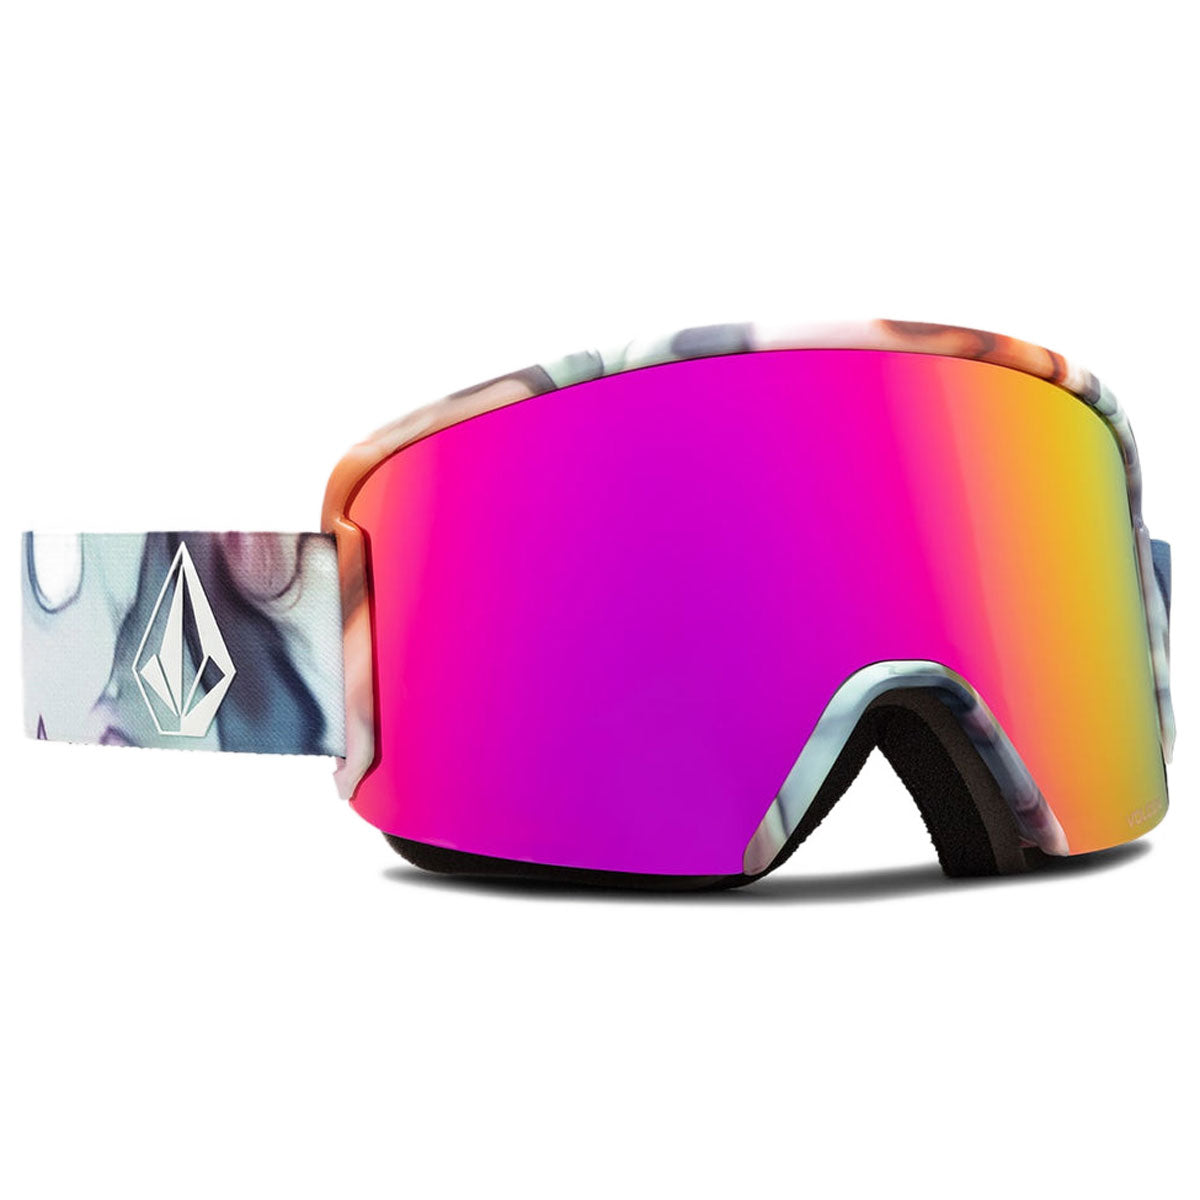 Volcom Garden Snowboard Goggles - Nebula/Pink Chrome image 3